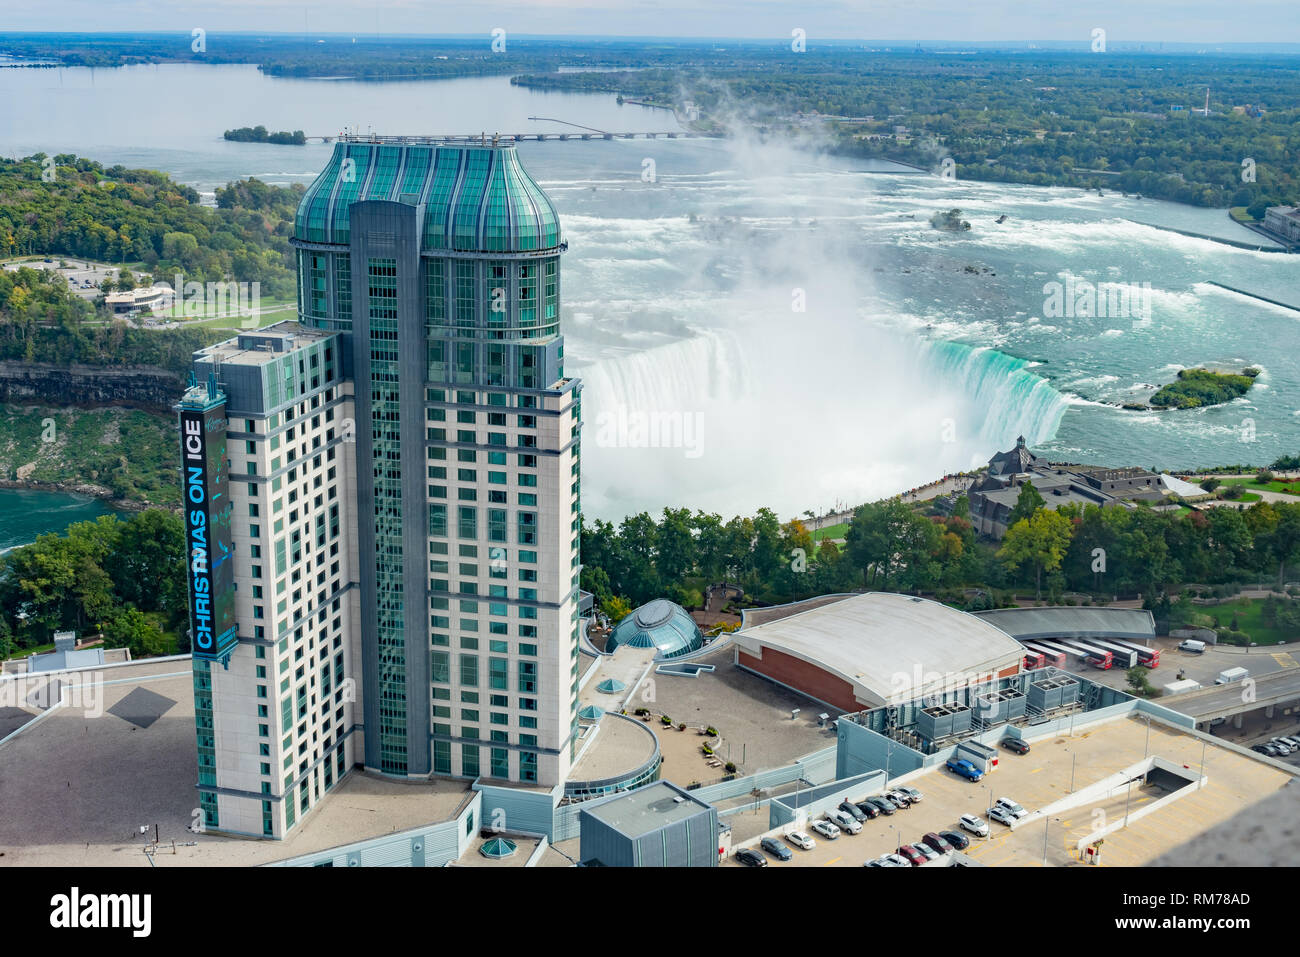 Niagara Falls, SEP 30: Aerial view of the Fallsview Casino Resort of the beautiful Niagara Falls on SEP 30, 2018 at Niagara Falls, Canada Stock Photo